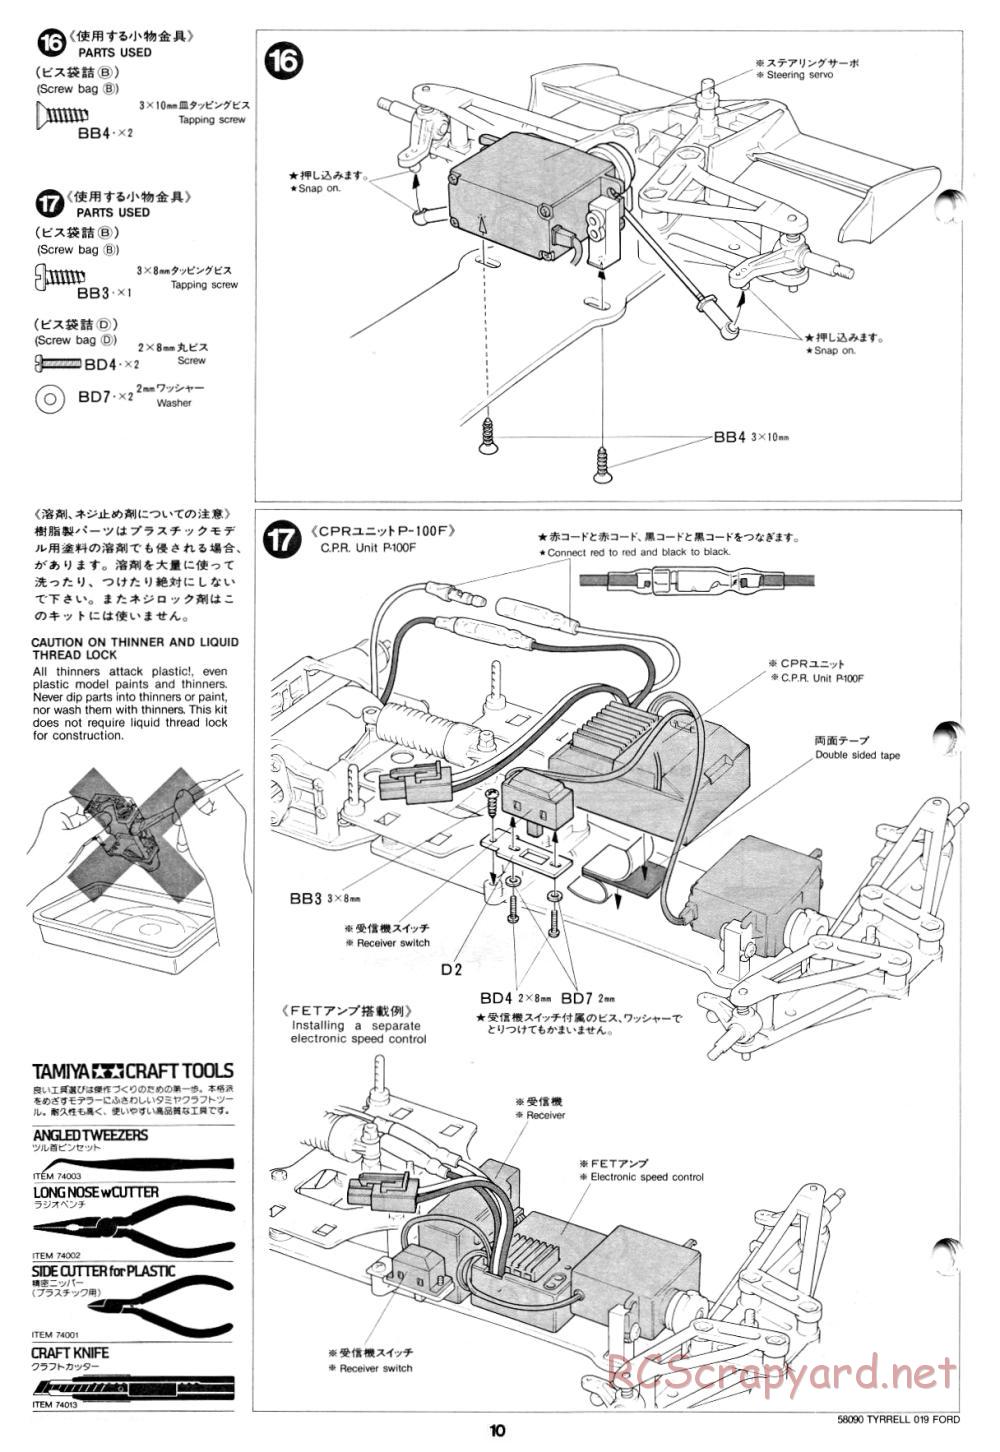 Tamiya - Tyrrell 019 Ford - 58090 - Manual - Page 10